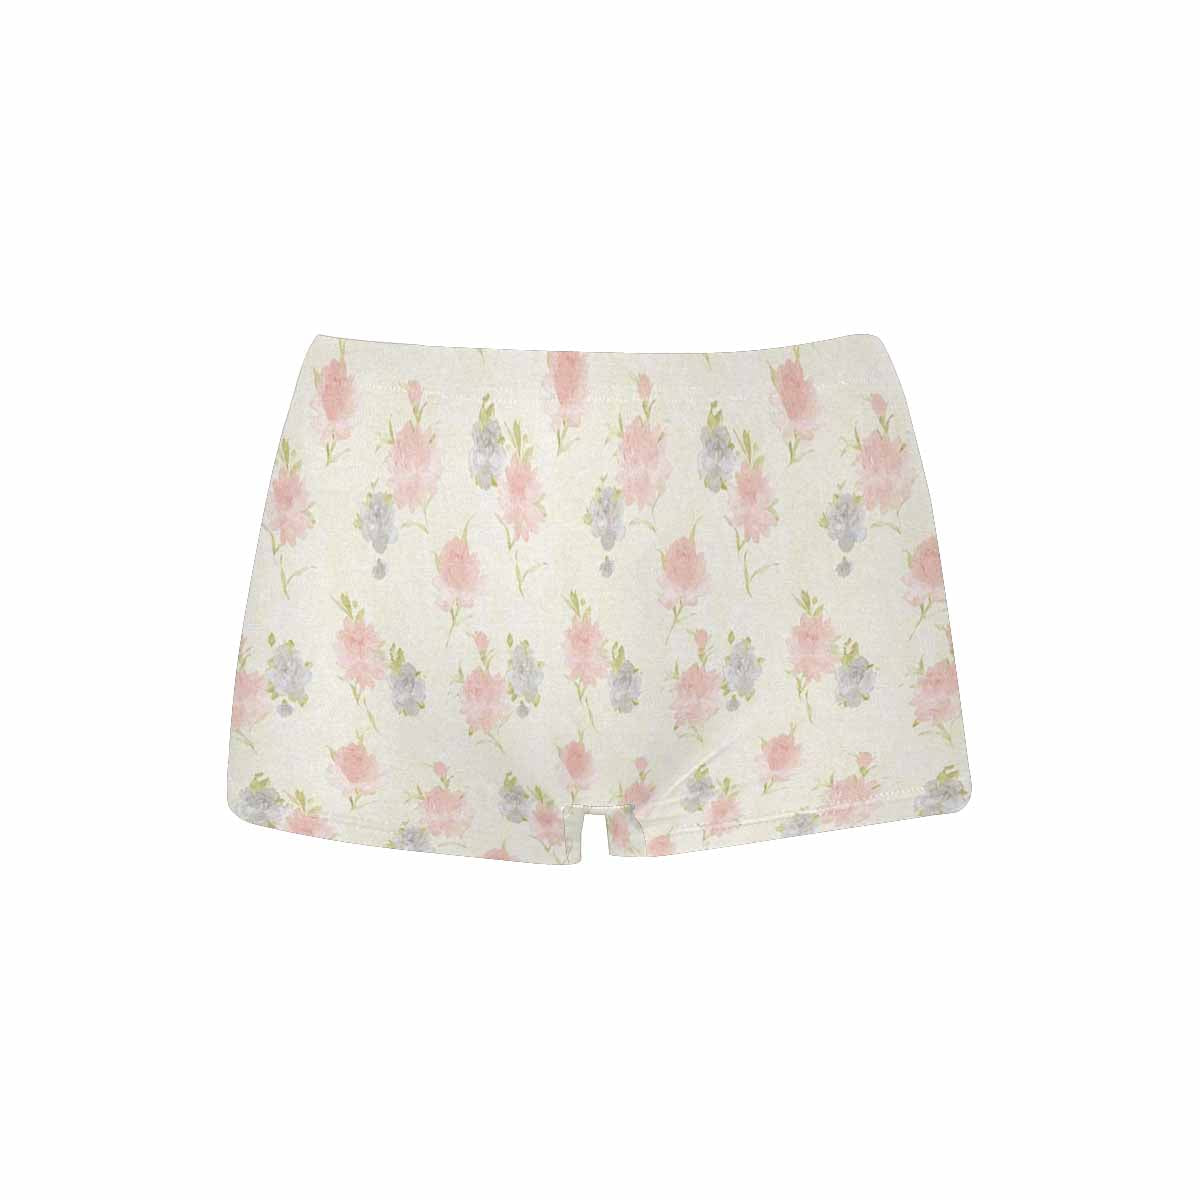 Floral 2, boyshorts, daisy dukes, pum pum shorts, panties, design 15